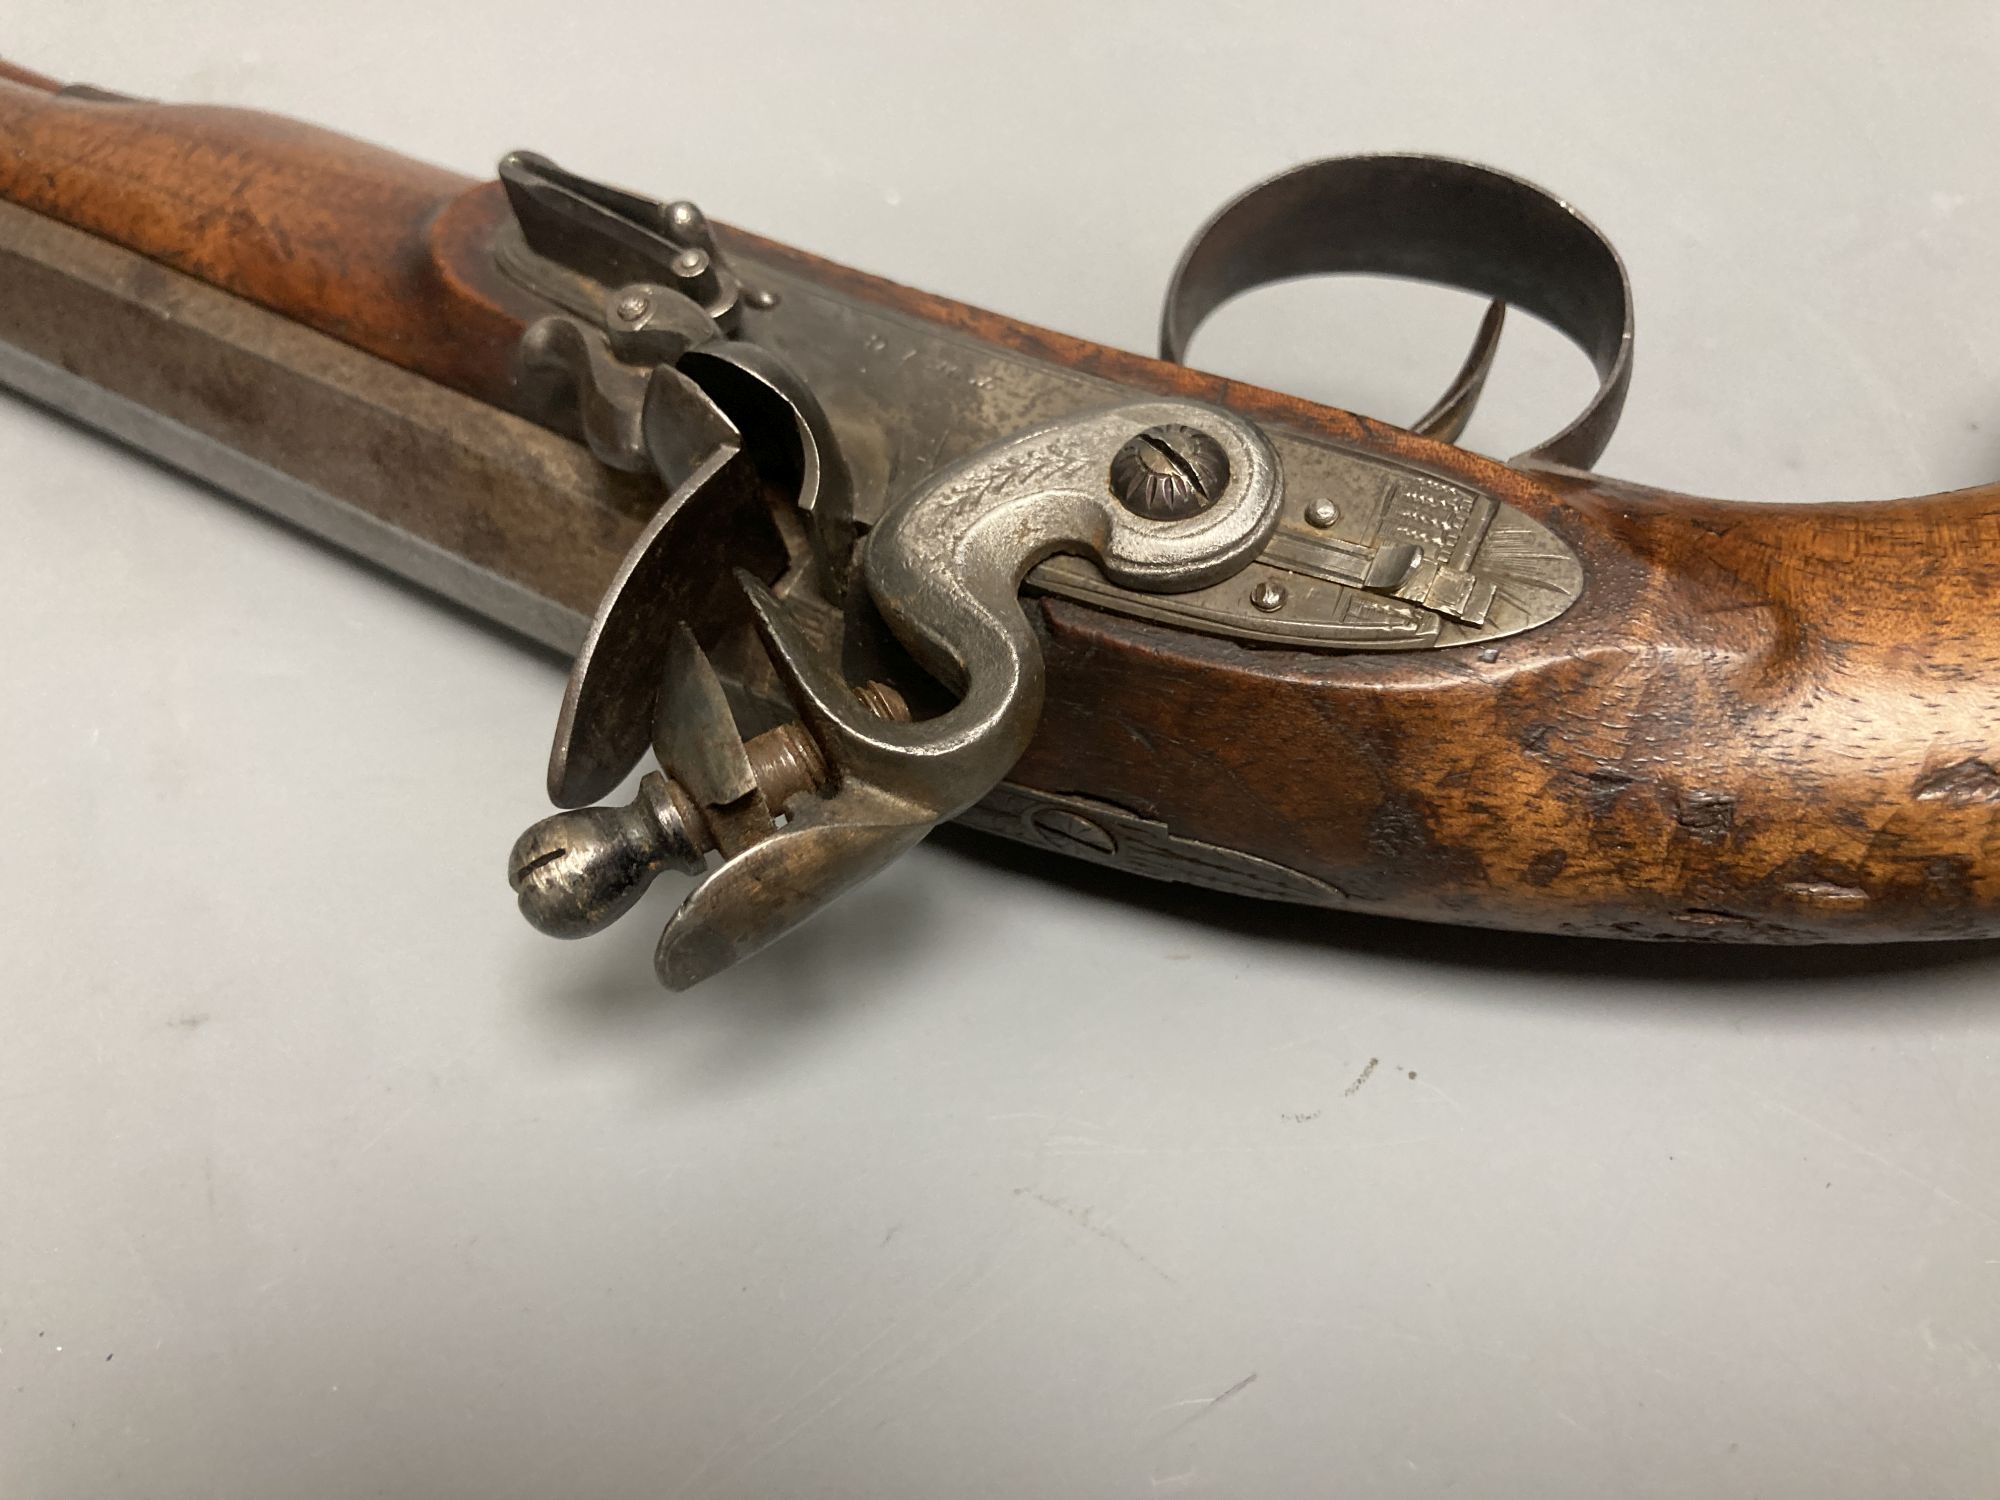 A 19th century octagonal barrelled flintlock pistol, lockplate engraved Twig